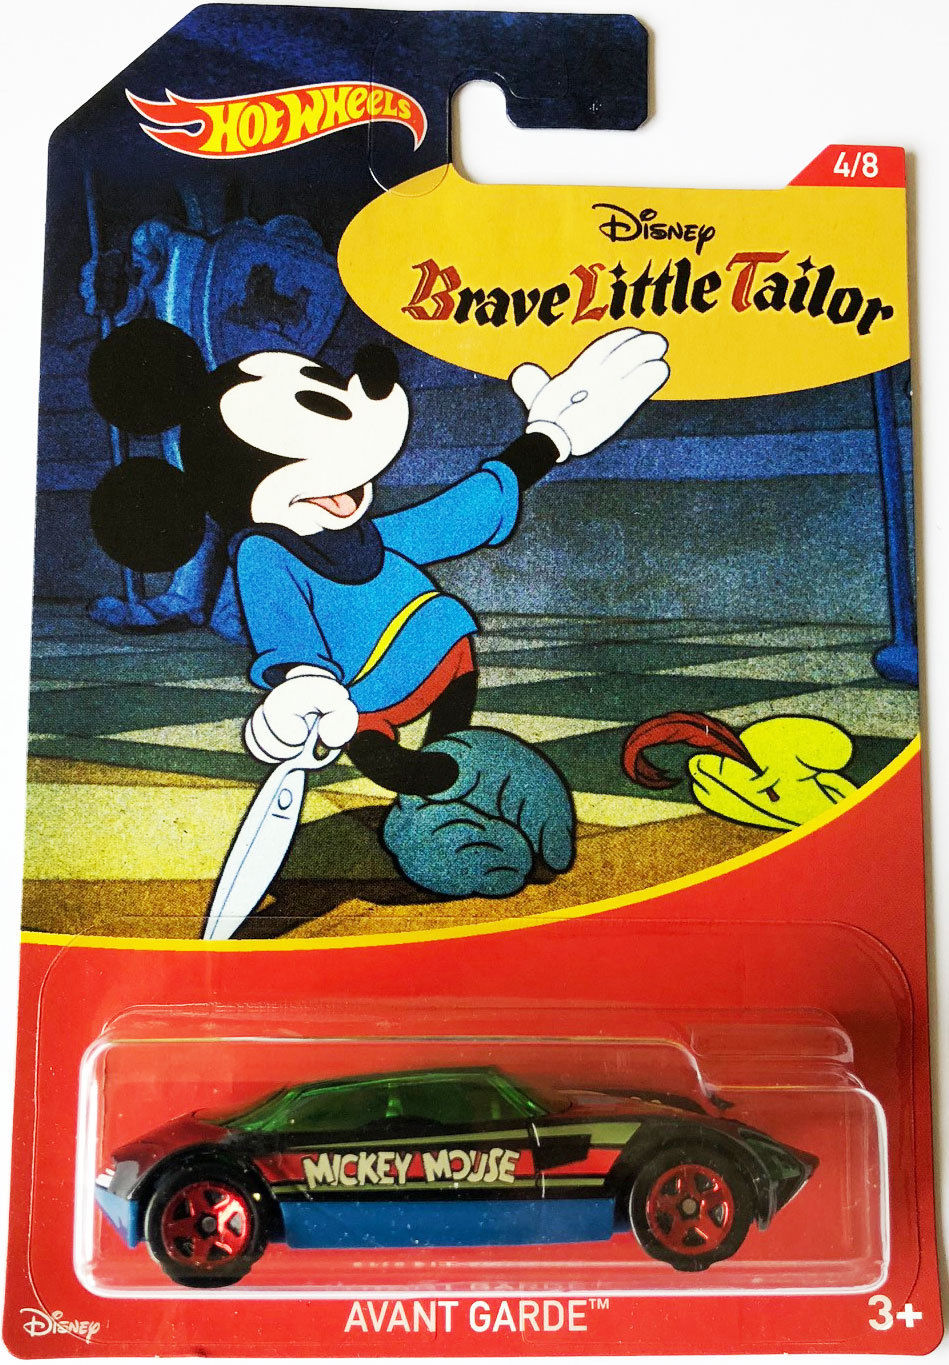 Hot Wheels 2018 - Disney Mickey Mouse # 4/8 - Avant Gardew - Black / Brave Little Tailor - Walmart Exclusive - Disney Blister Card